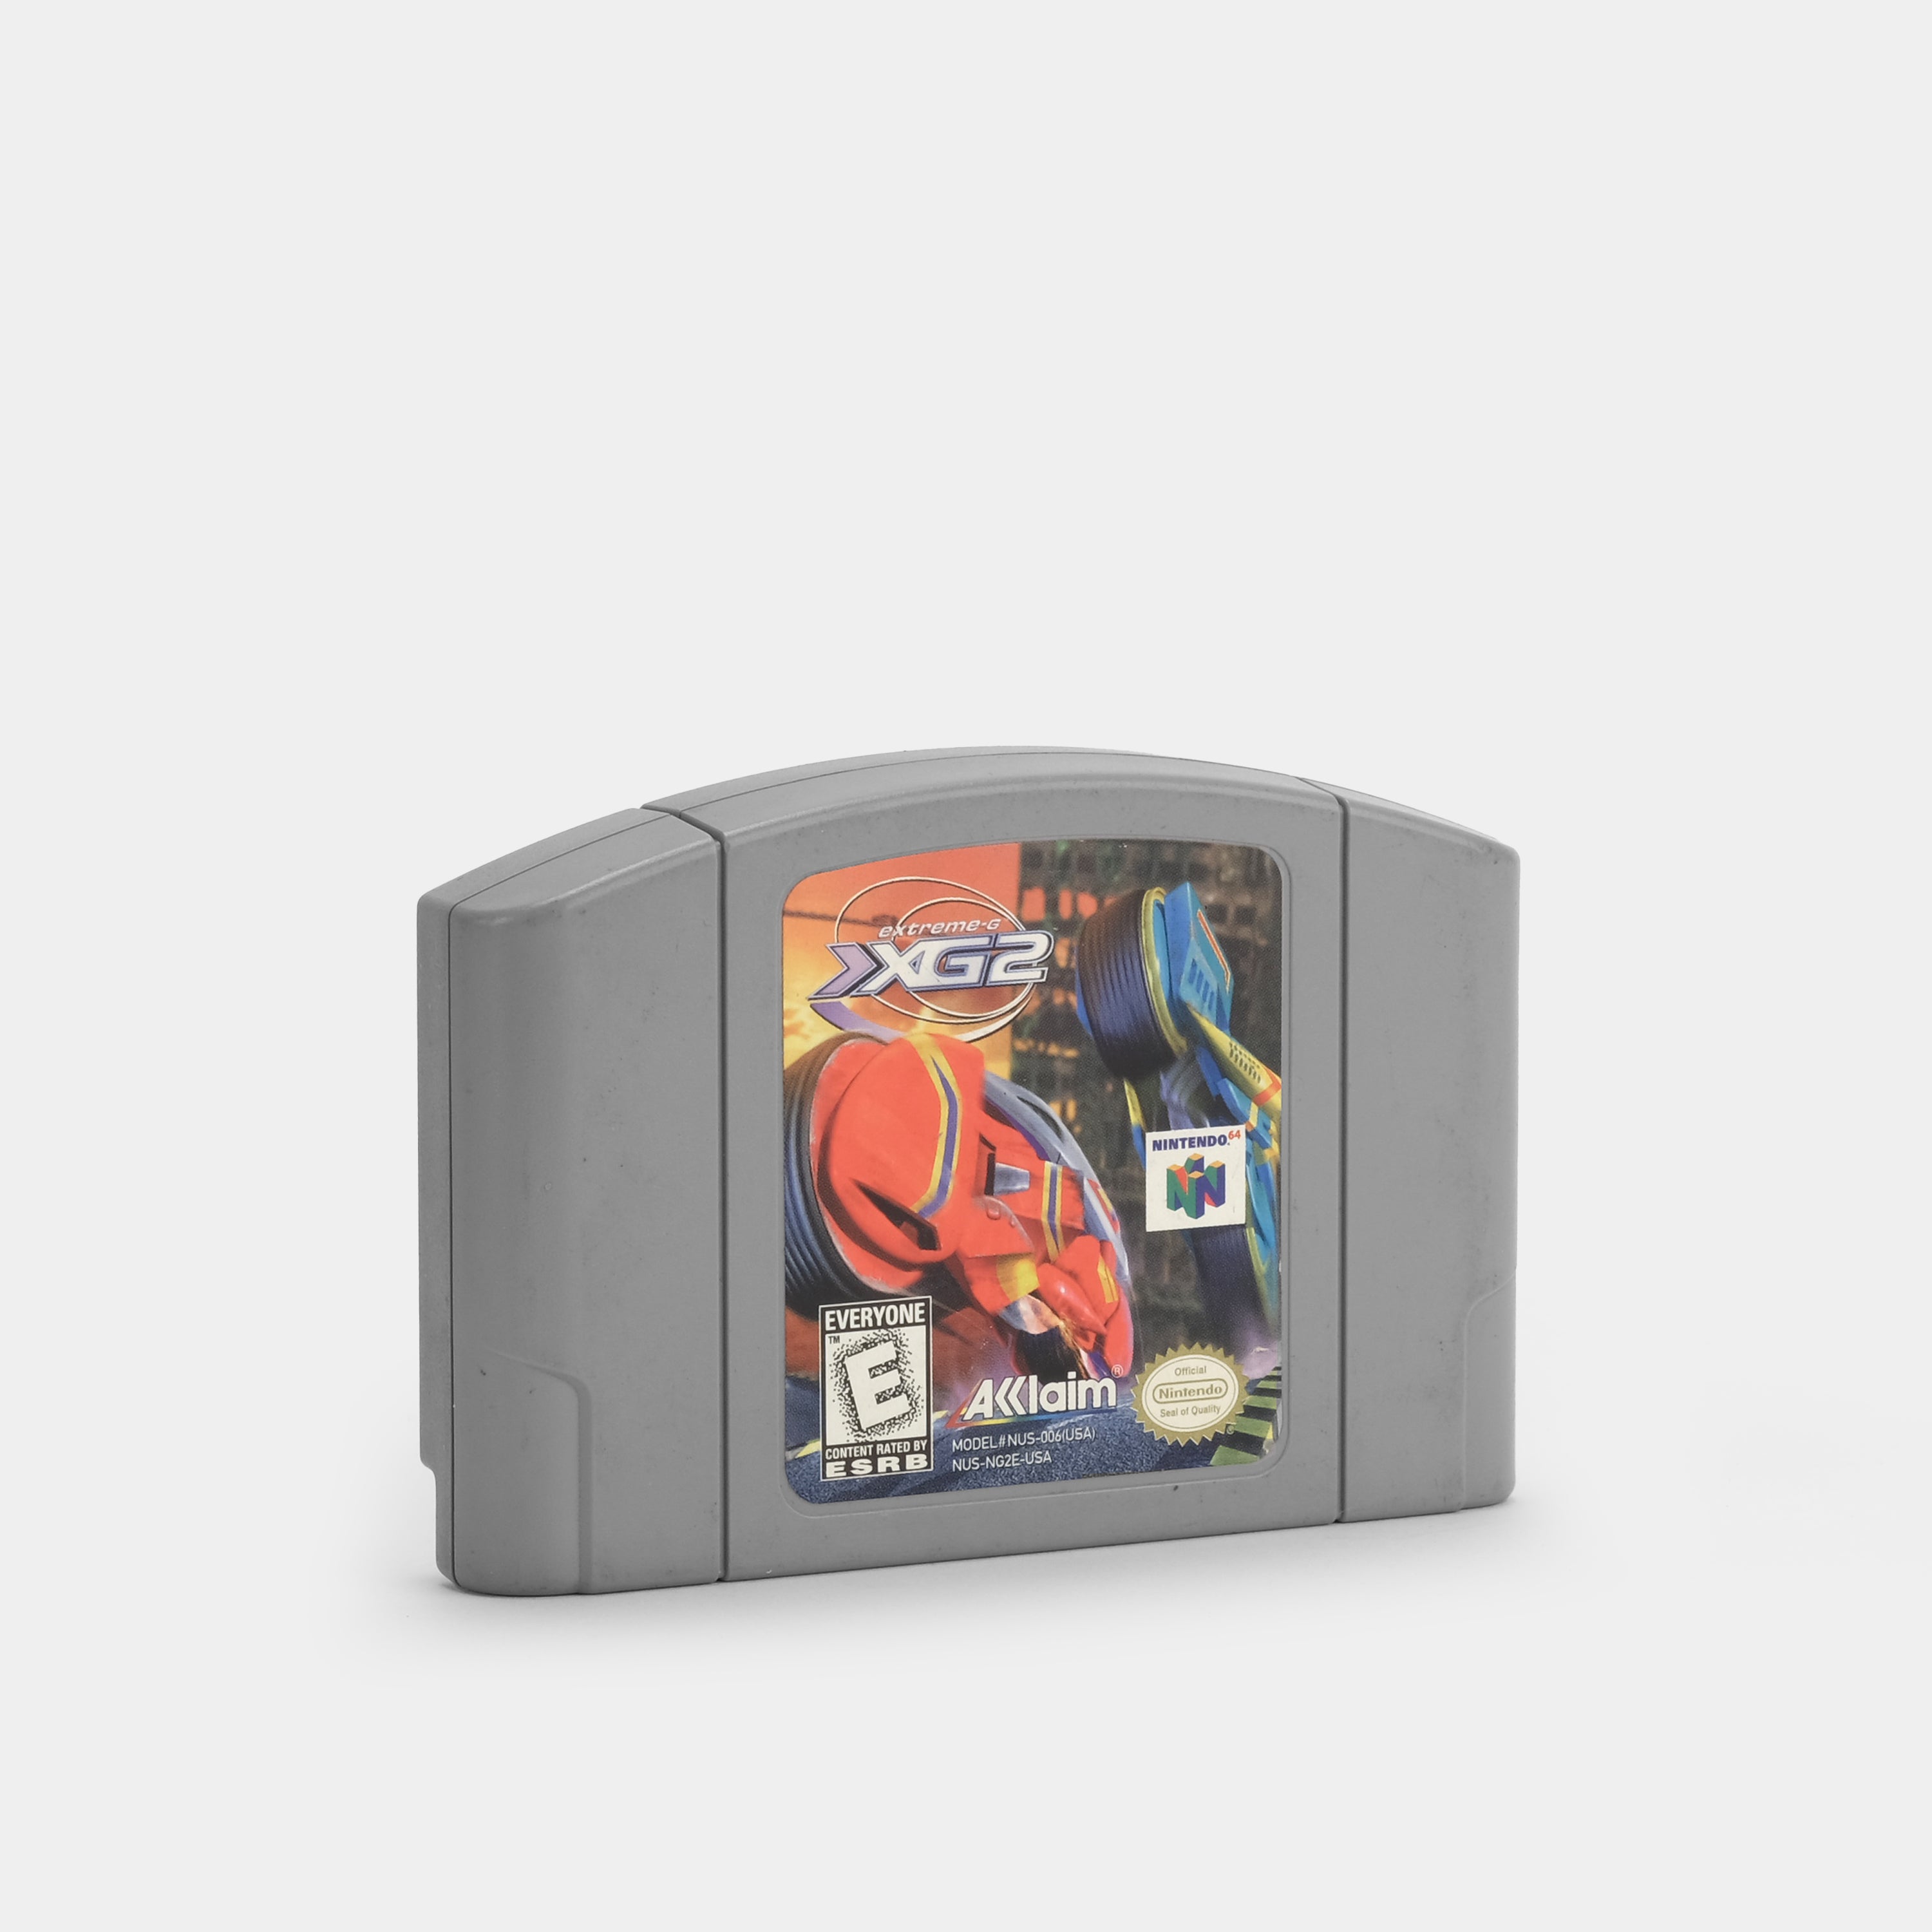 Extreme G: XG2 Nintendo 64 Game